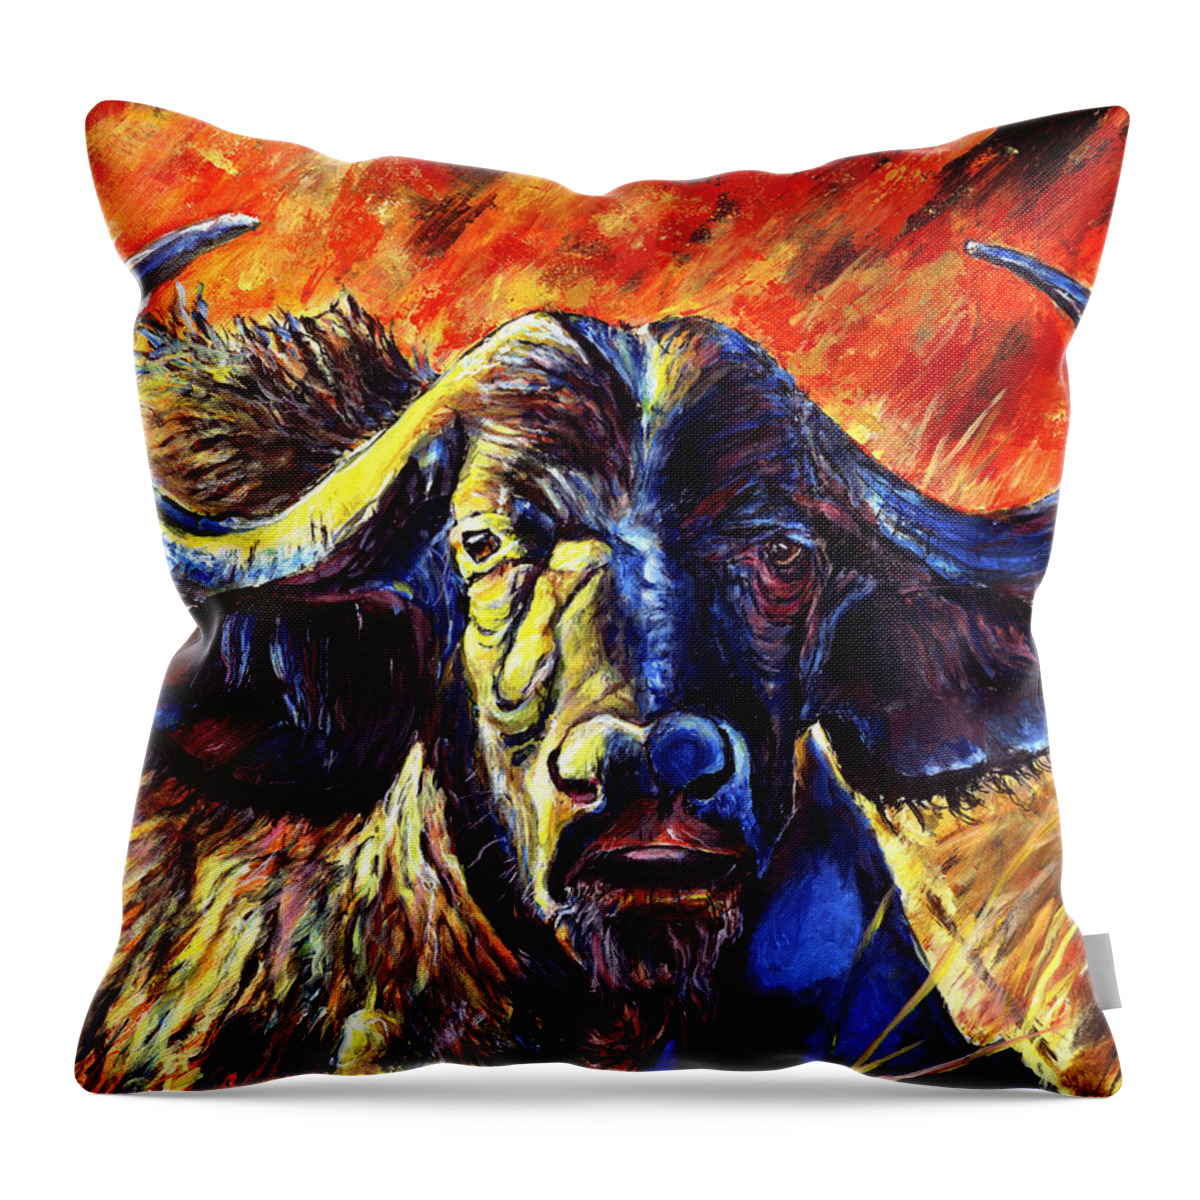 African Cape Buffalo Throw Pillow featuring the painting African Cape Buffalo by John Bohn